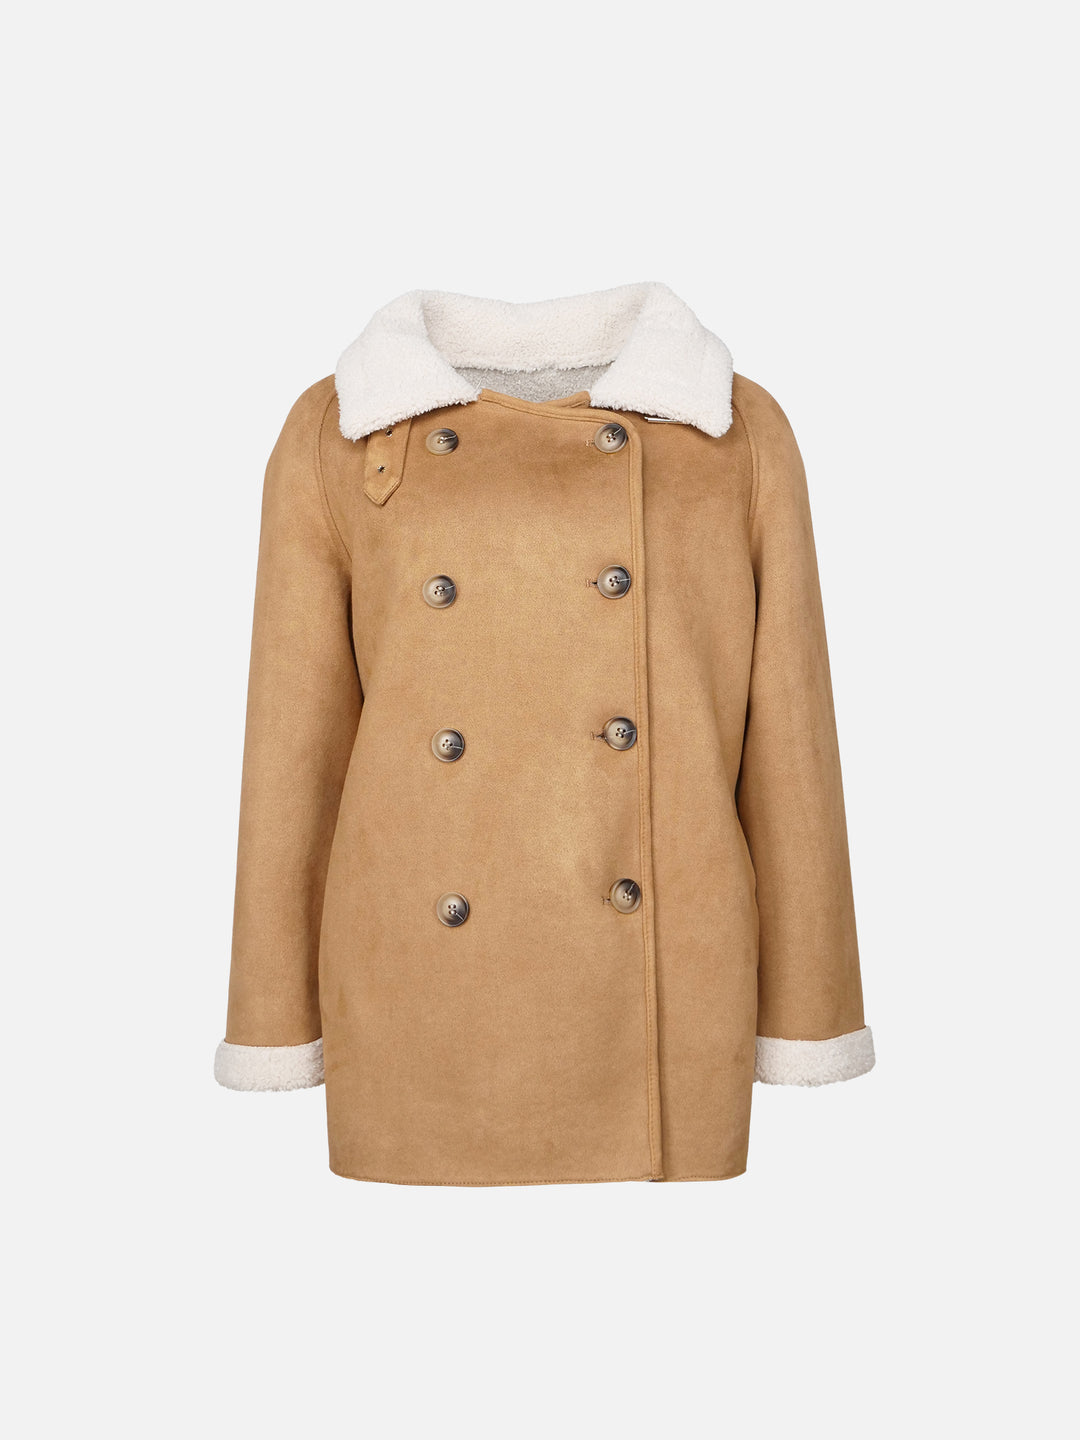 Hanaine, 85 cm. - Collar - Air 100% Wool jacket - Women - Cognac